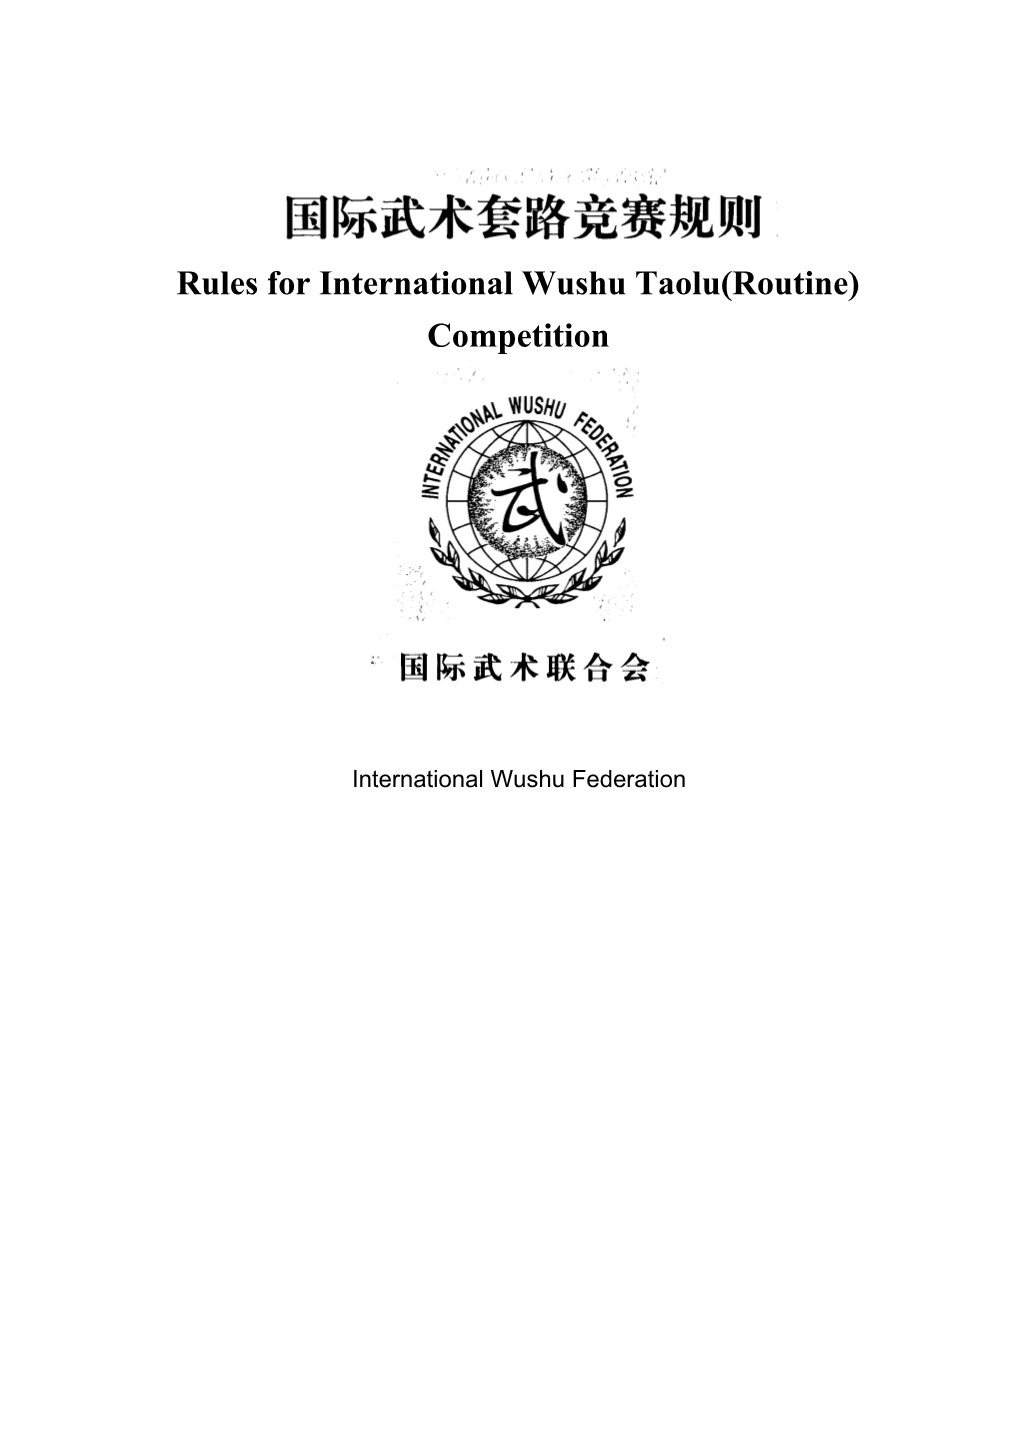 Rules for International Wushu Taolu(Routine) Competition